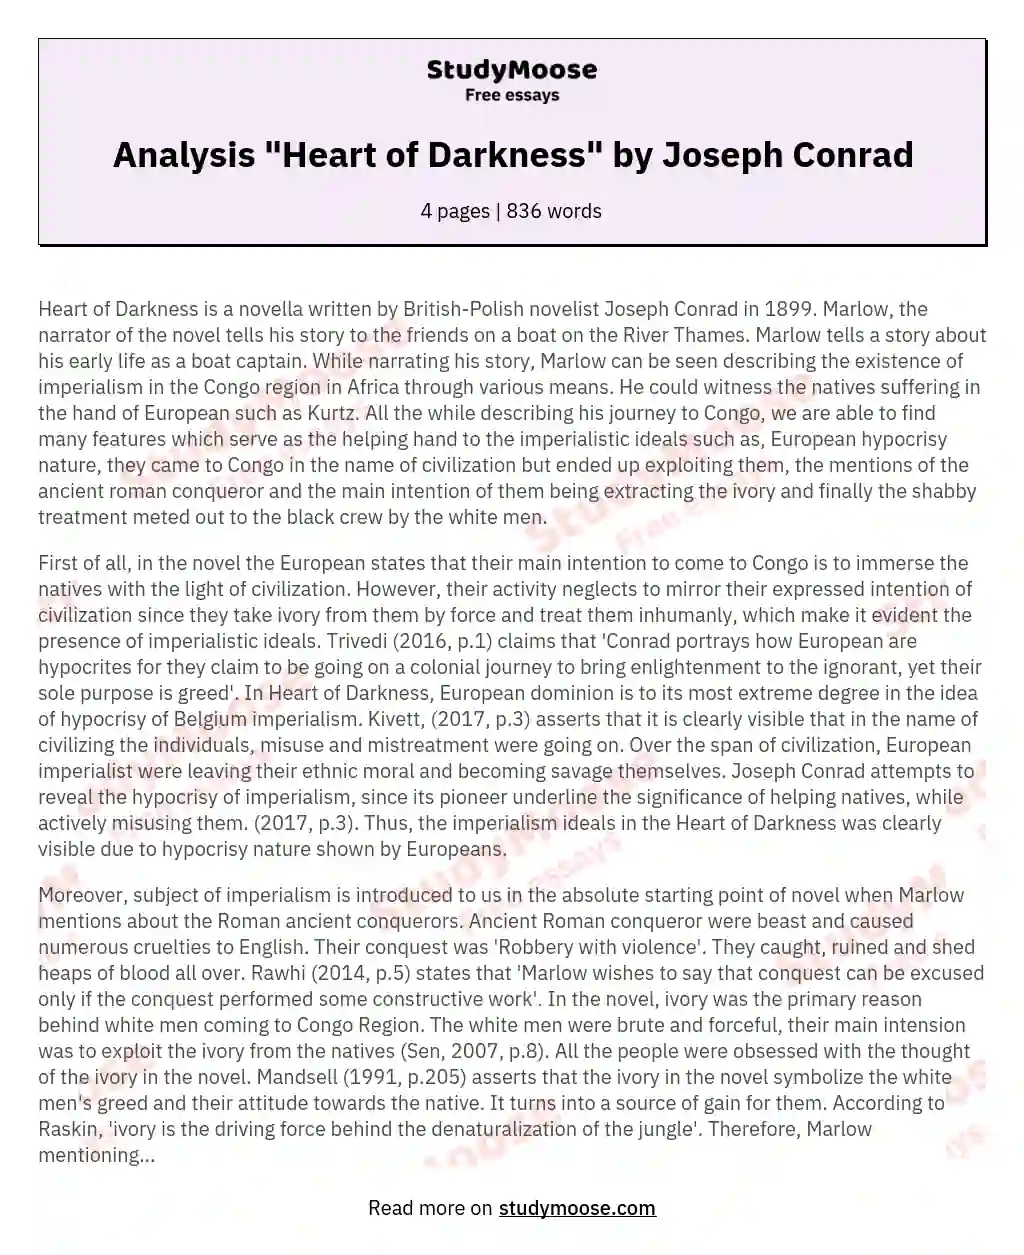 Analysis "Heart of Darkness" by Joseph Conrad essay